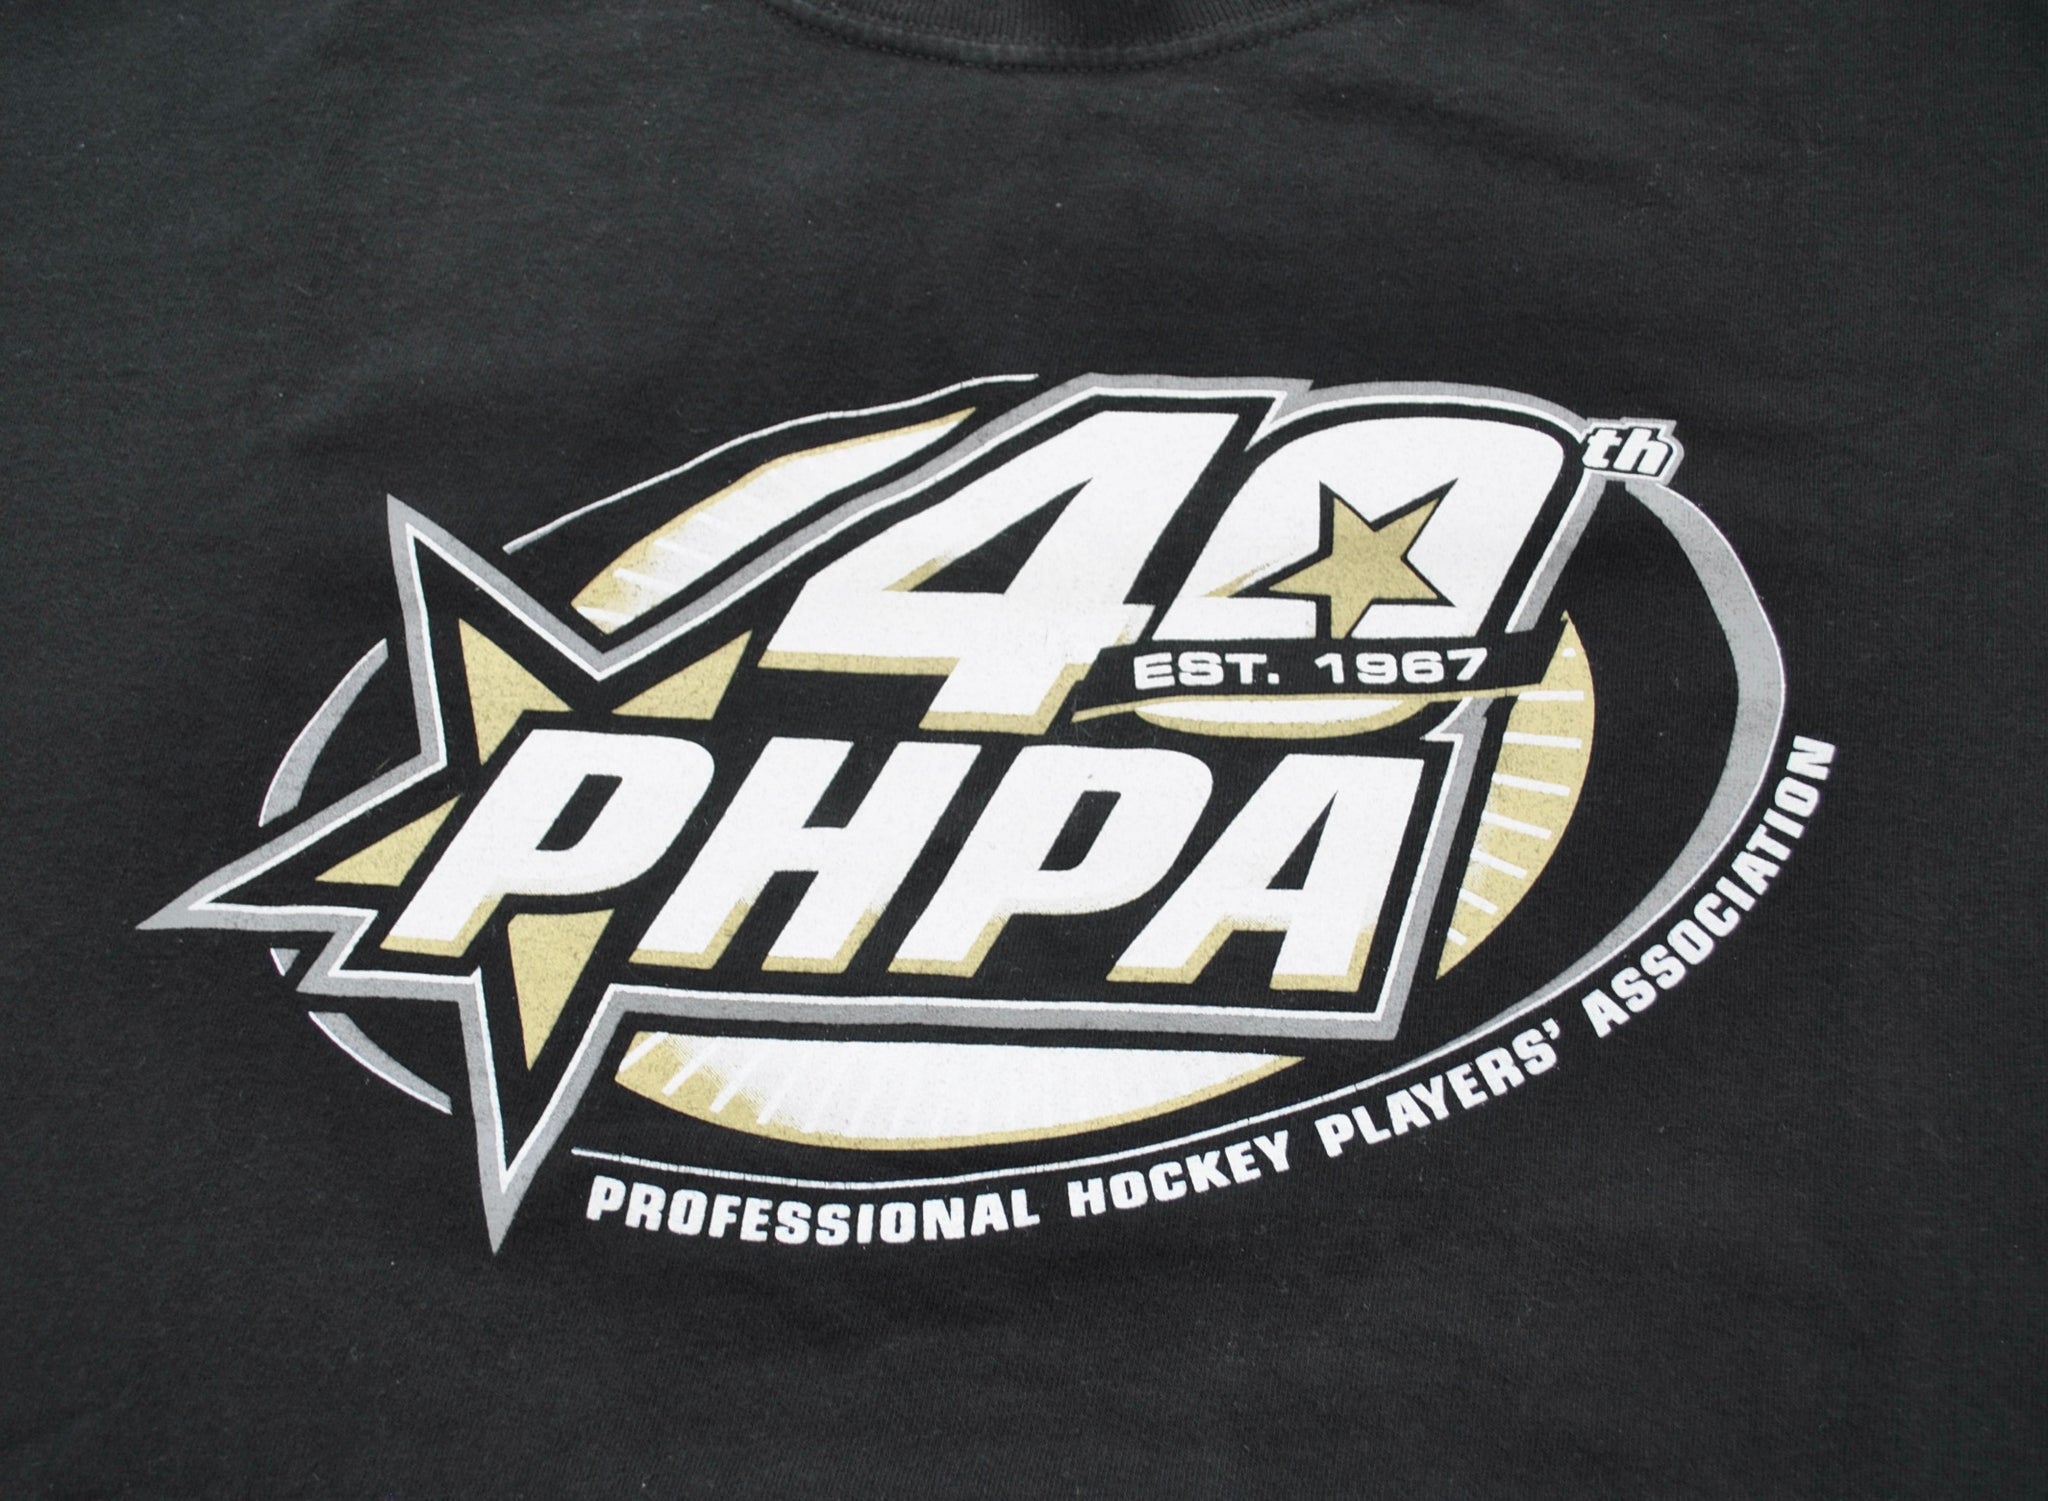 Professional Hockey Players' Association